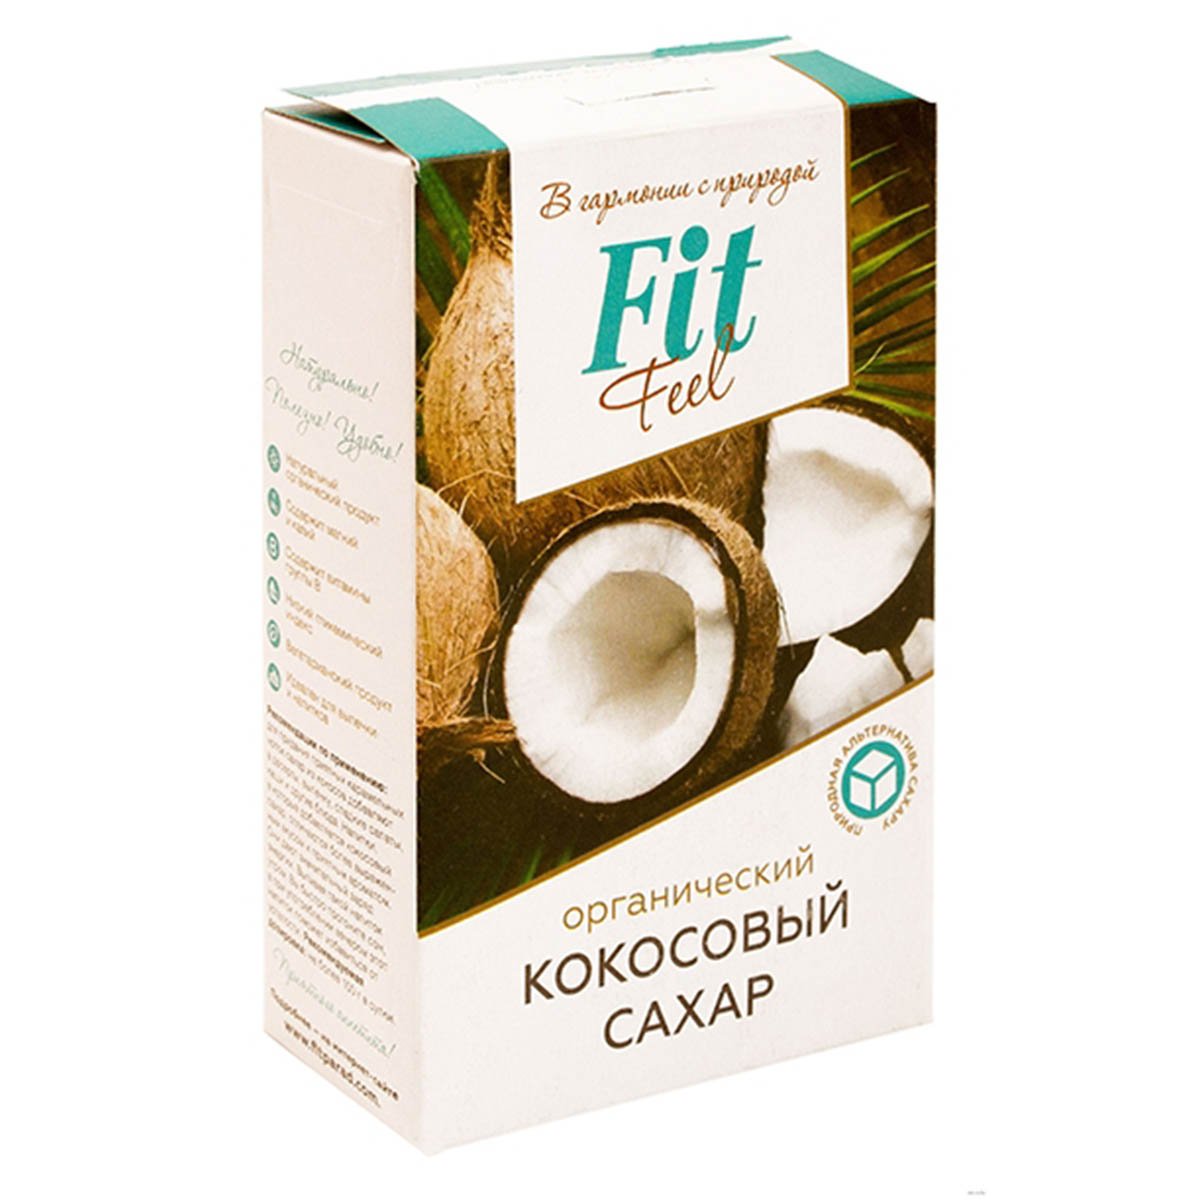 Сахар 200 кг. Кокосовый сахар FITFEEL 200 гр. Fit parad органический кокосовый сахар (200гр.). Сахарозаменитель фит парад кокосовый. Кокосовый сахар фит парад 150 г.